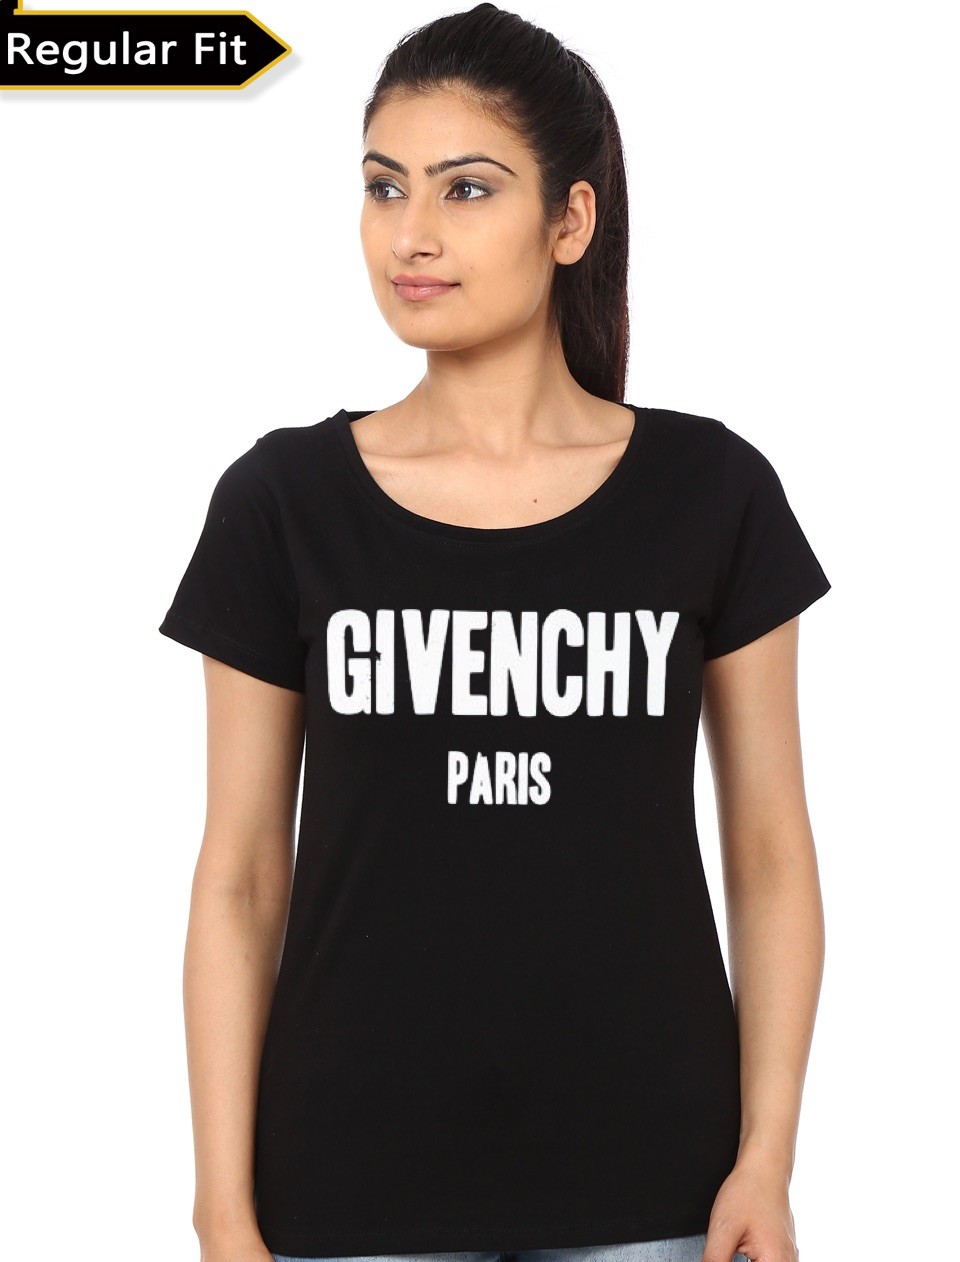 Givenchy Paris Girl's Black T-Shirt - Supreme Shirts